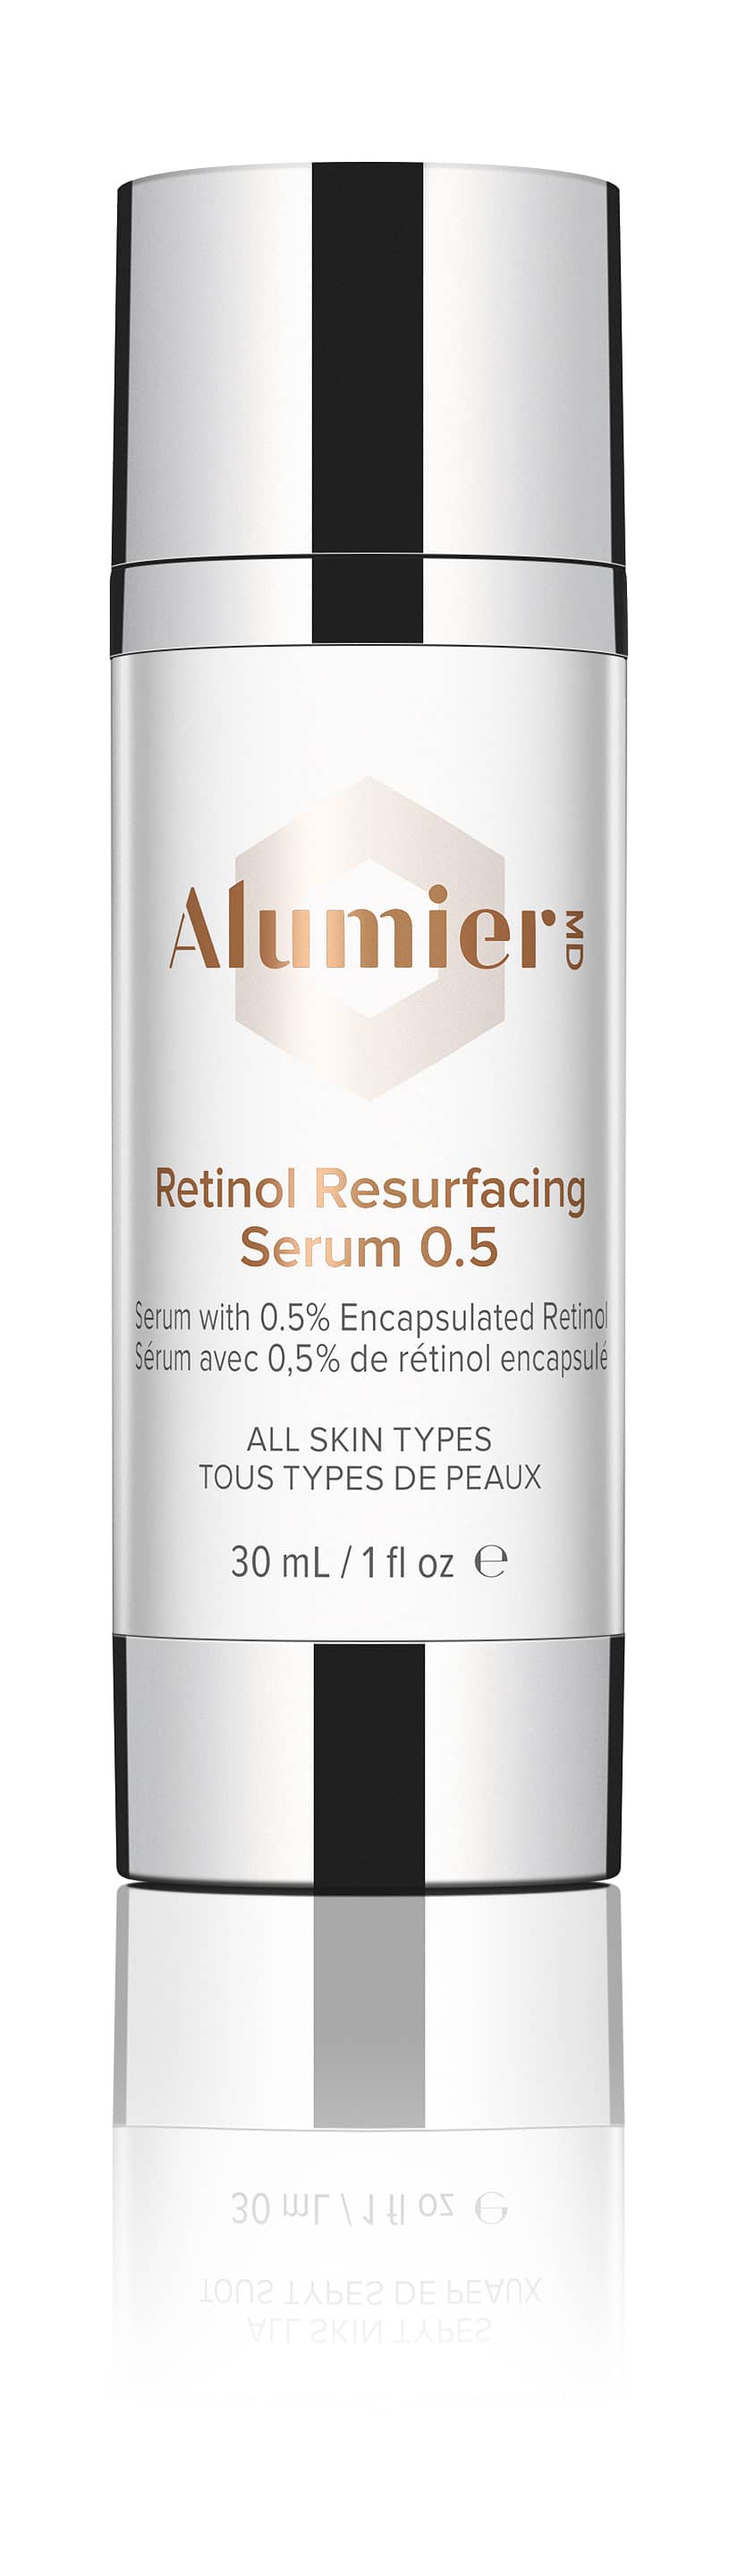 AlumierMD Retinol Resurfacing Serum 0.5